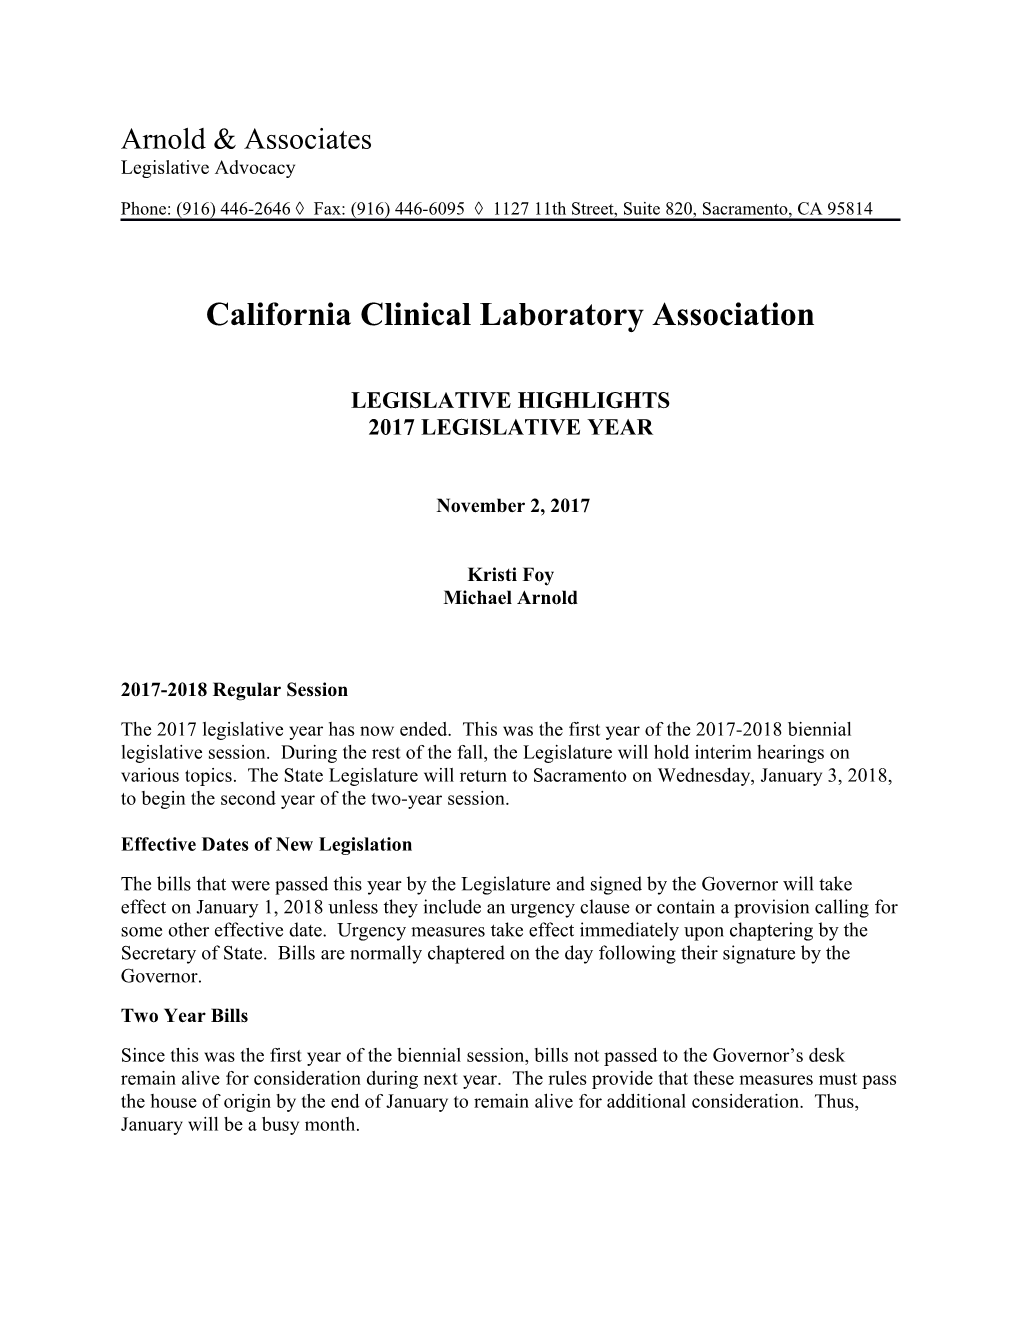 California Clinical Laboratory Association